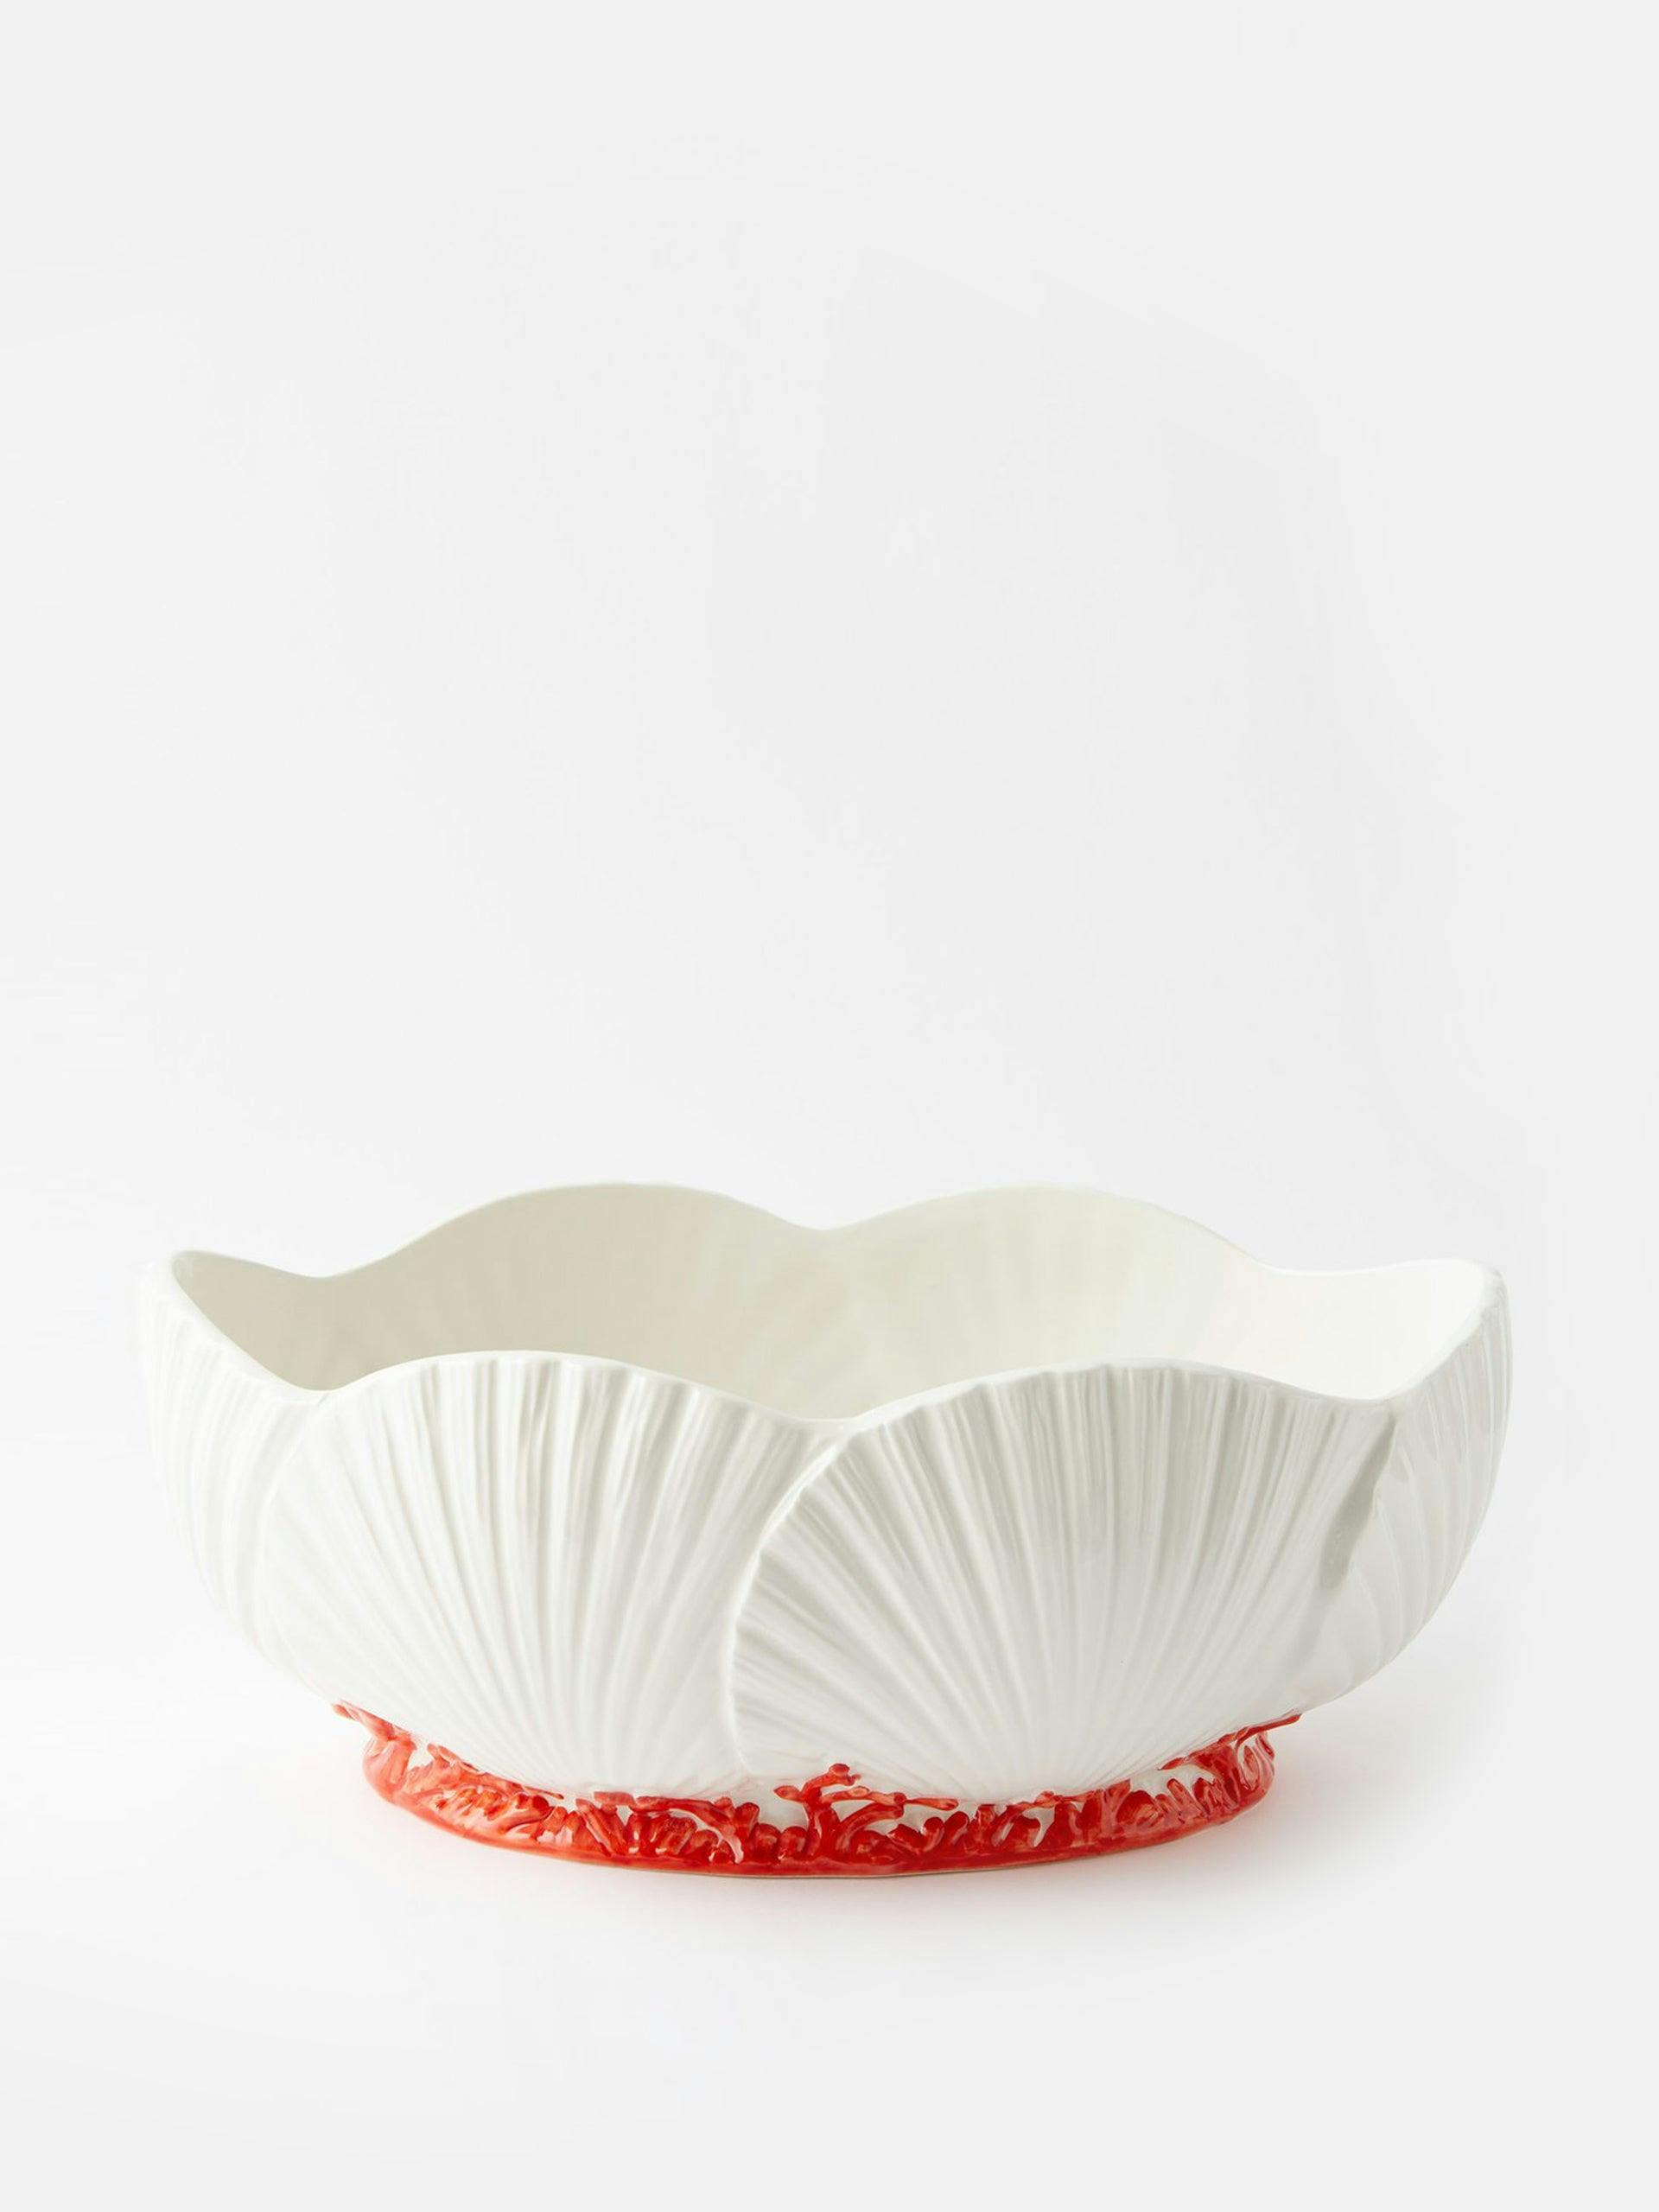 Large ceramic shell bowl